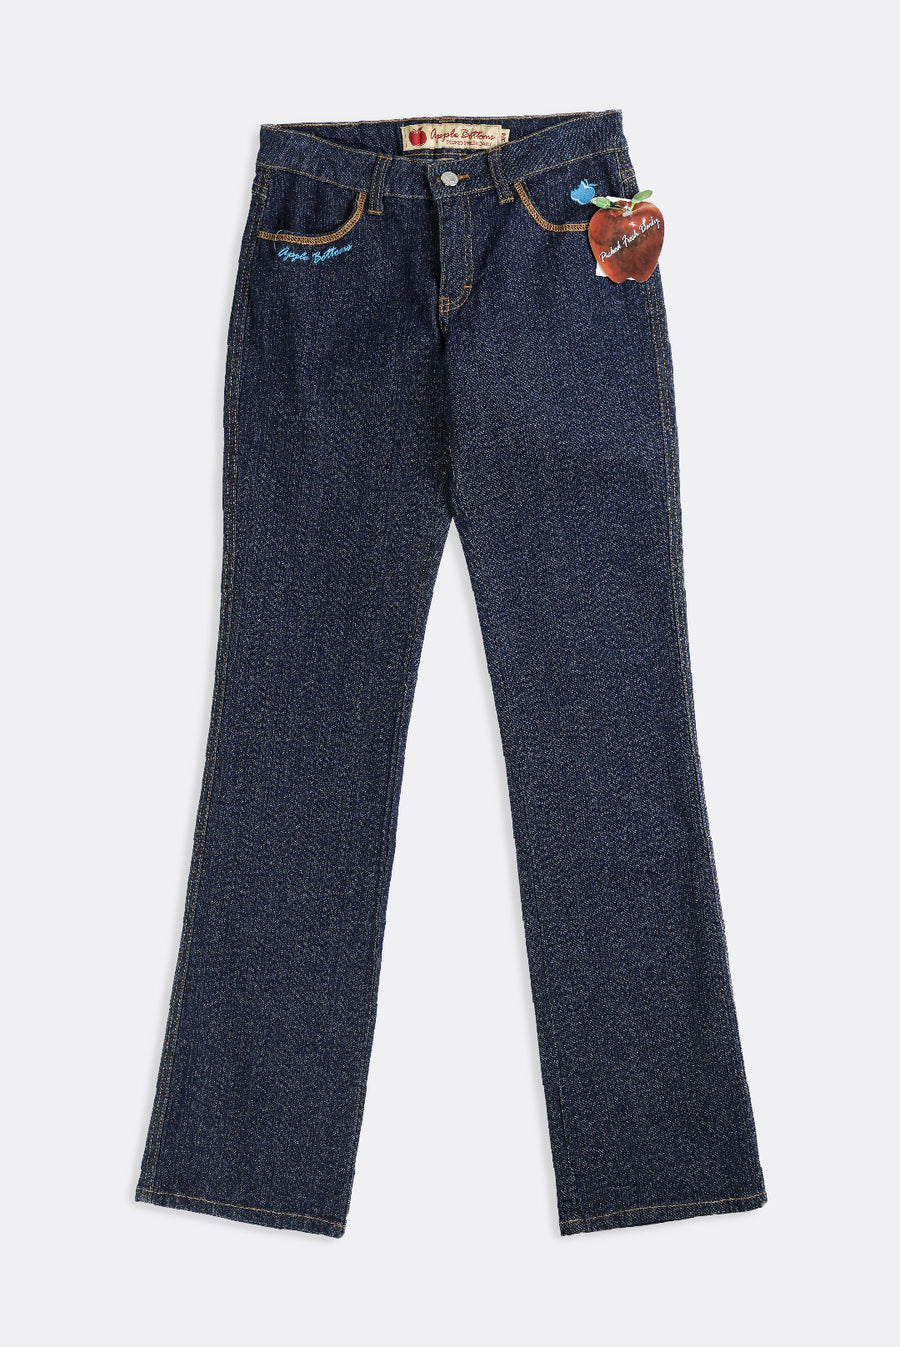 Deadstock Apple Bottom Blue Embroidered Denim Pants - W29